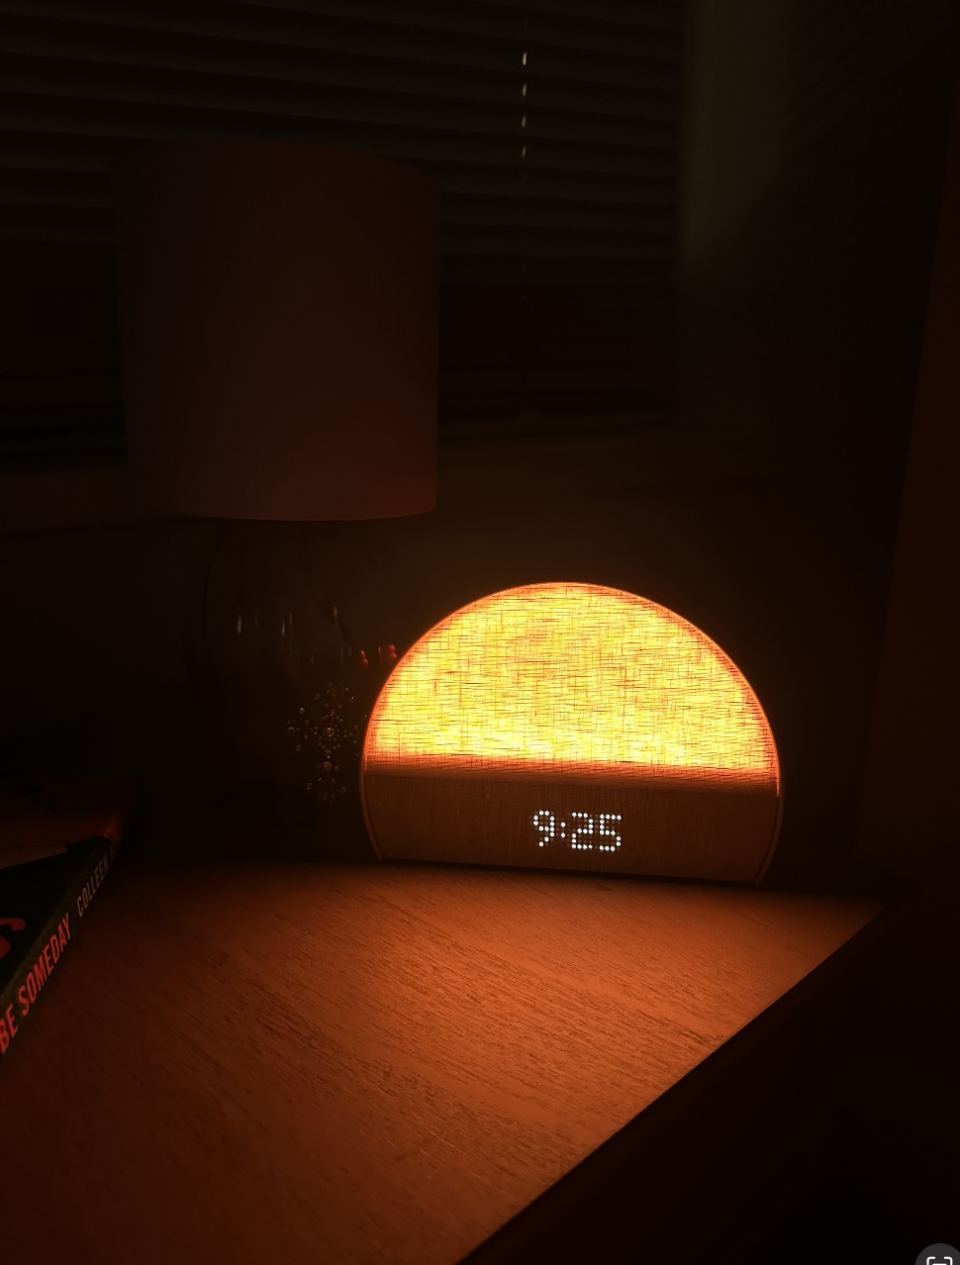 Sunrise alarm clock displaying 9:36 in a dimly lit room